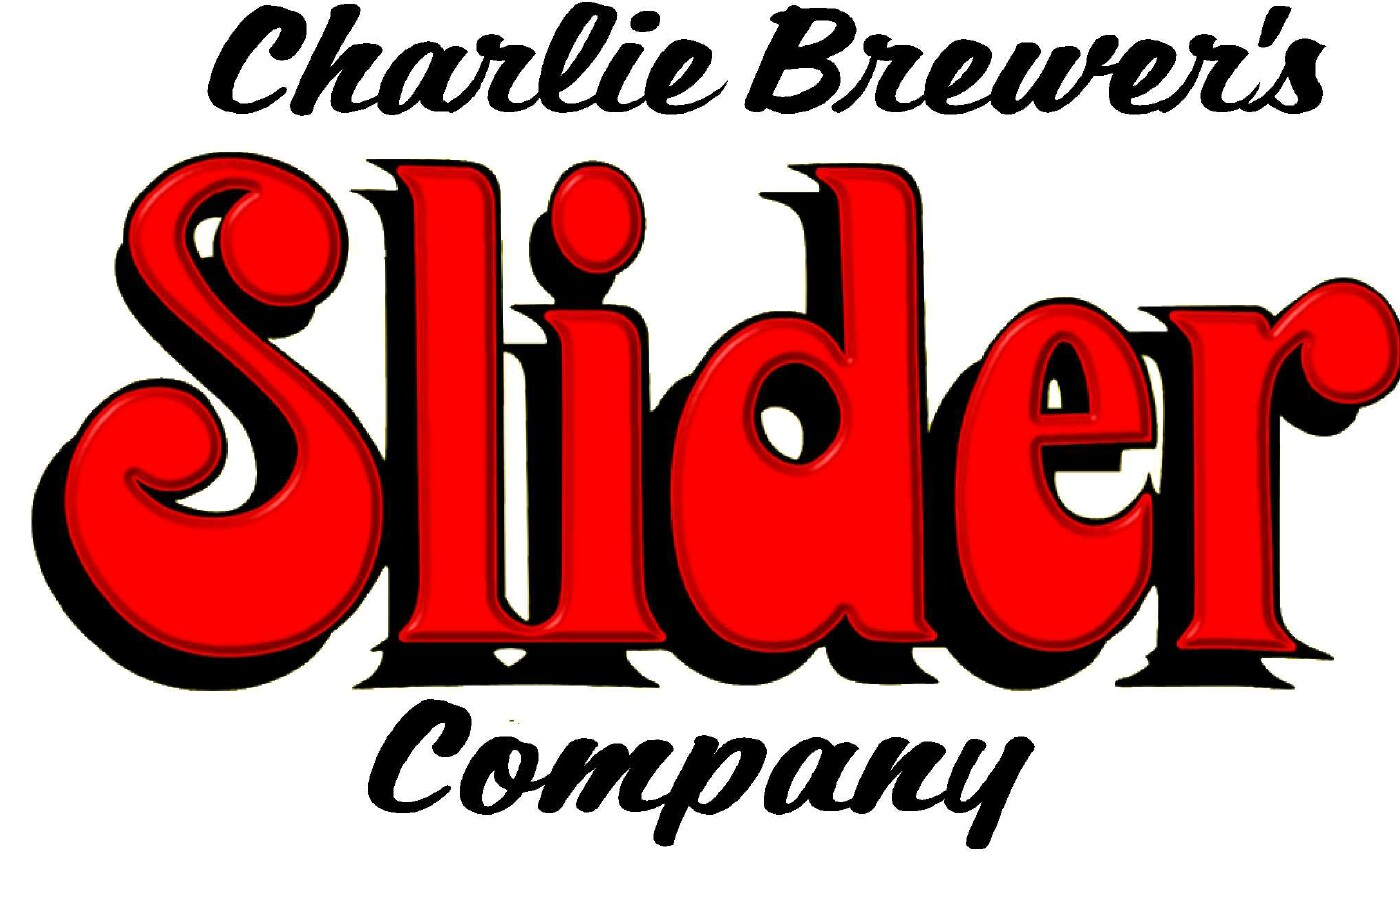 Charlie Brewer logo.jpg